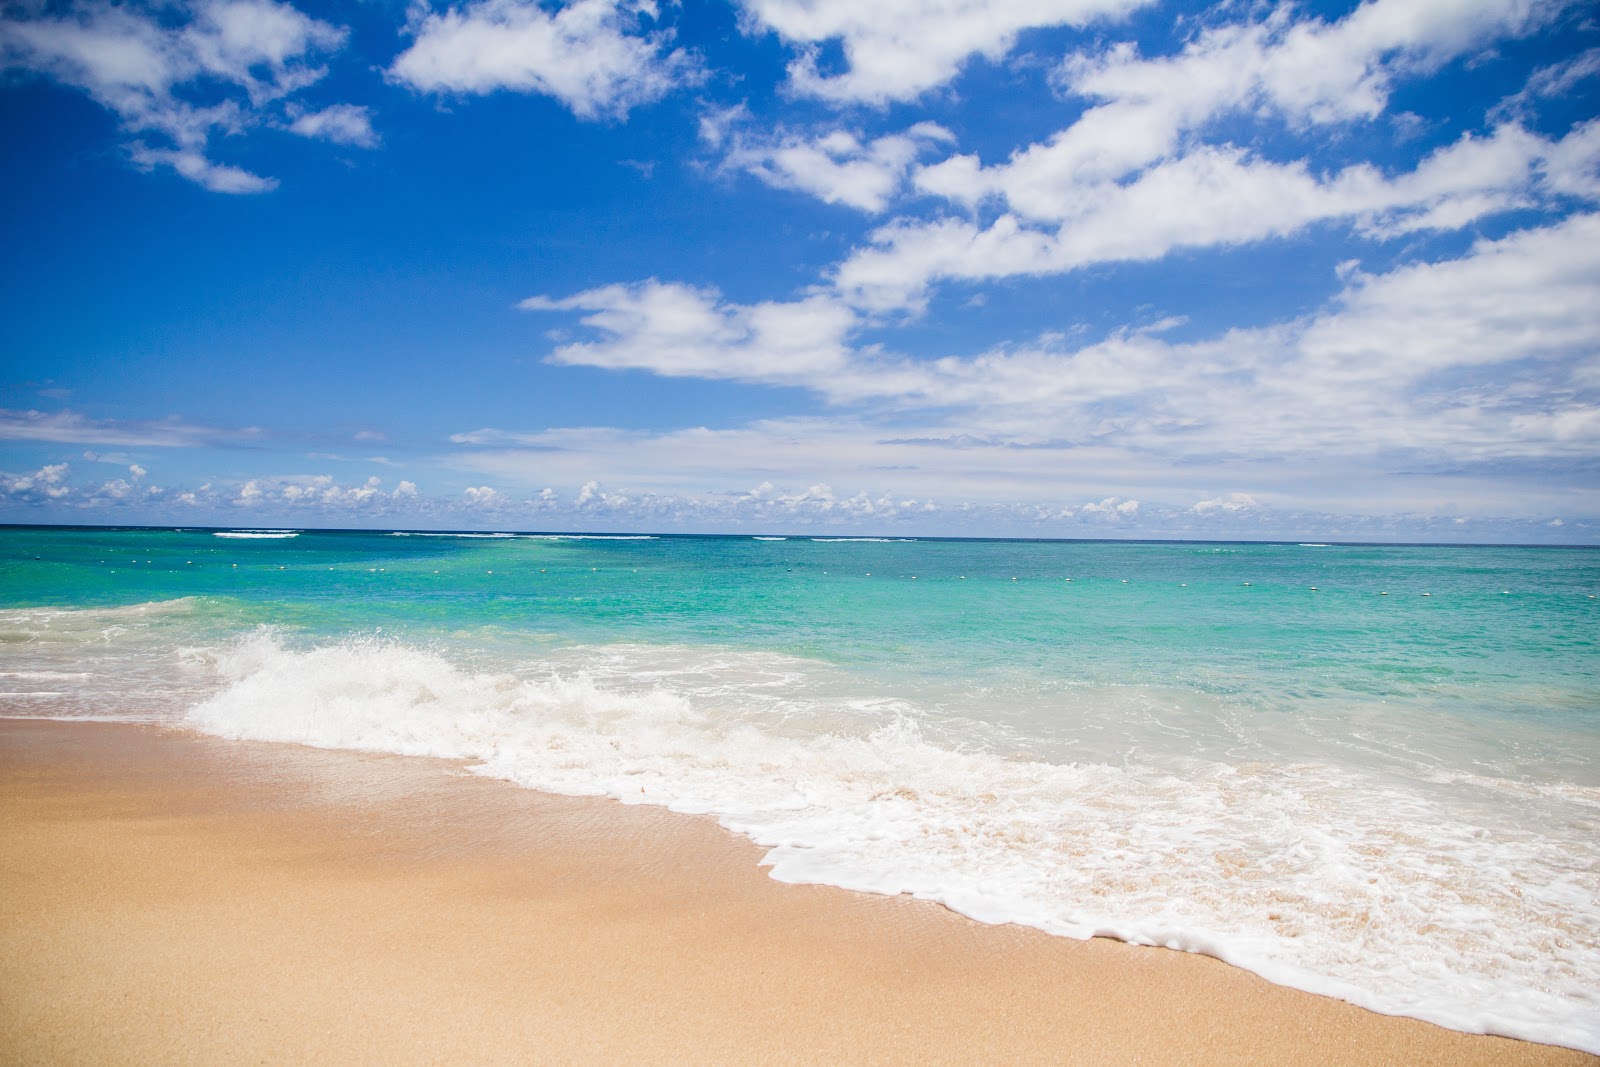 https://images.pexels.com/photos/459556/pexels-photo-459556.jpeg?cs=srgb&dl=background-beach-beautiful-459556.jpg&fm=jpg